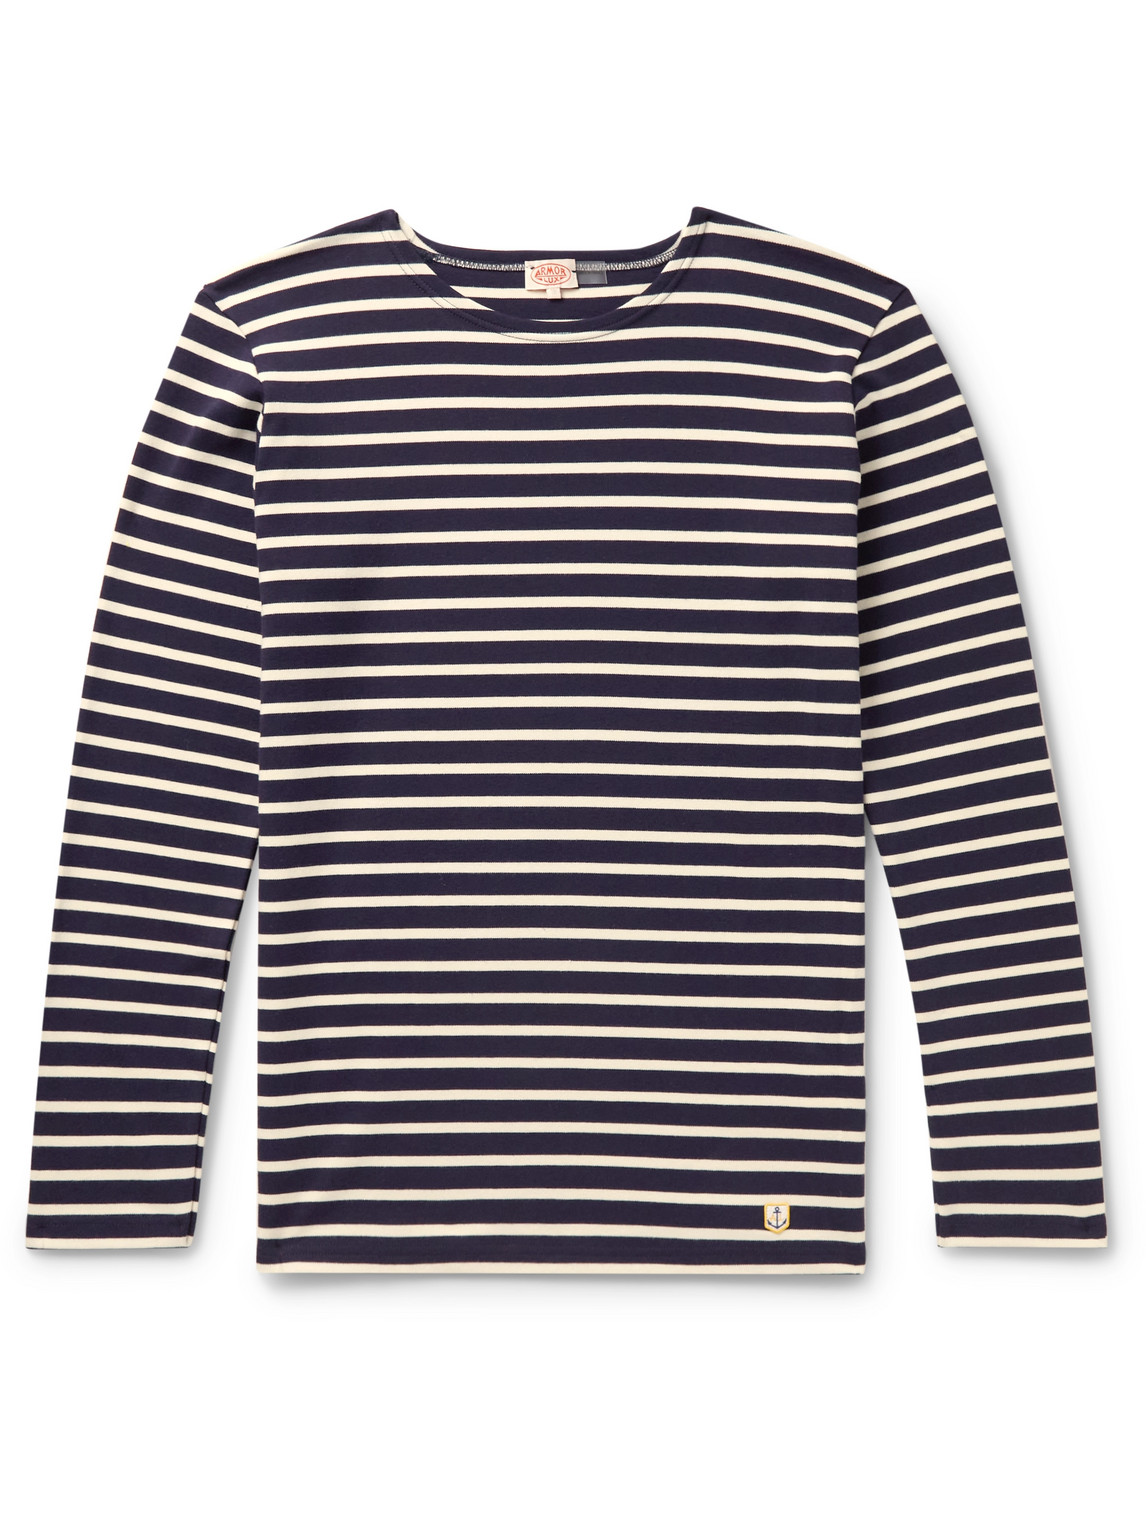 Armor-lux Breton Striped Cotton-jersey T-shirt In Multi